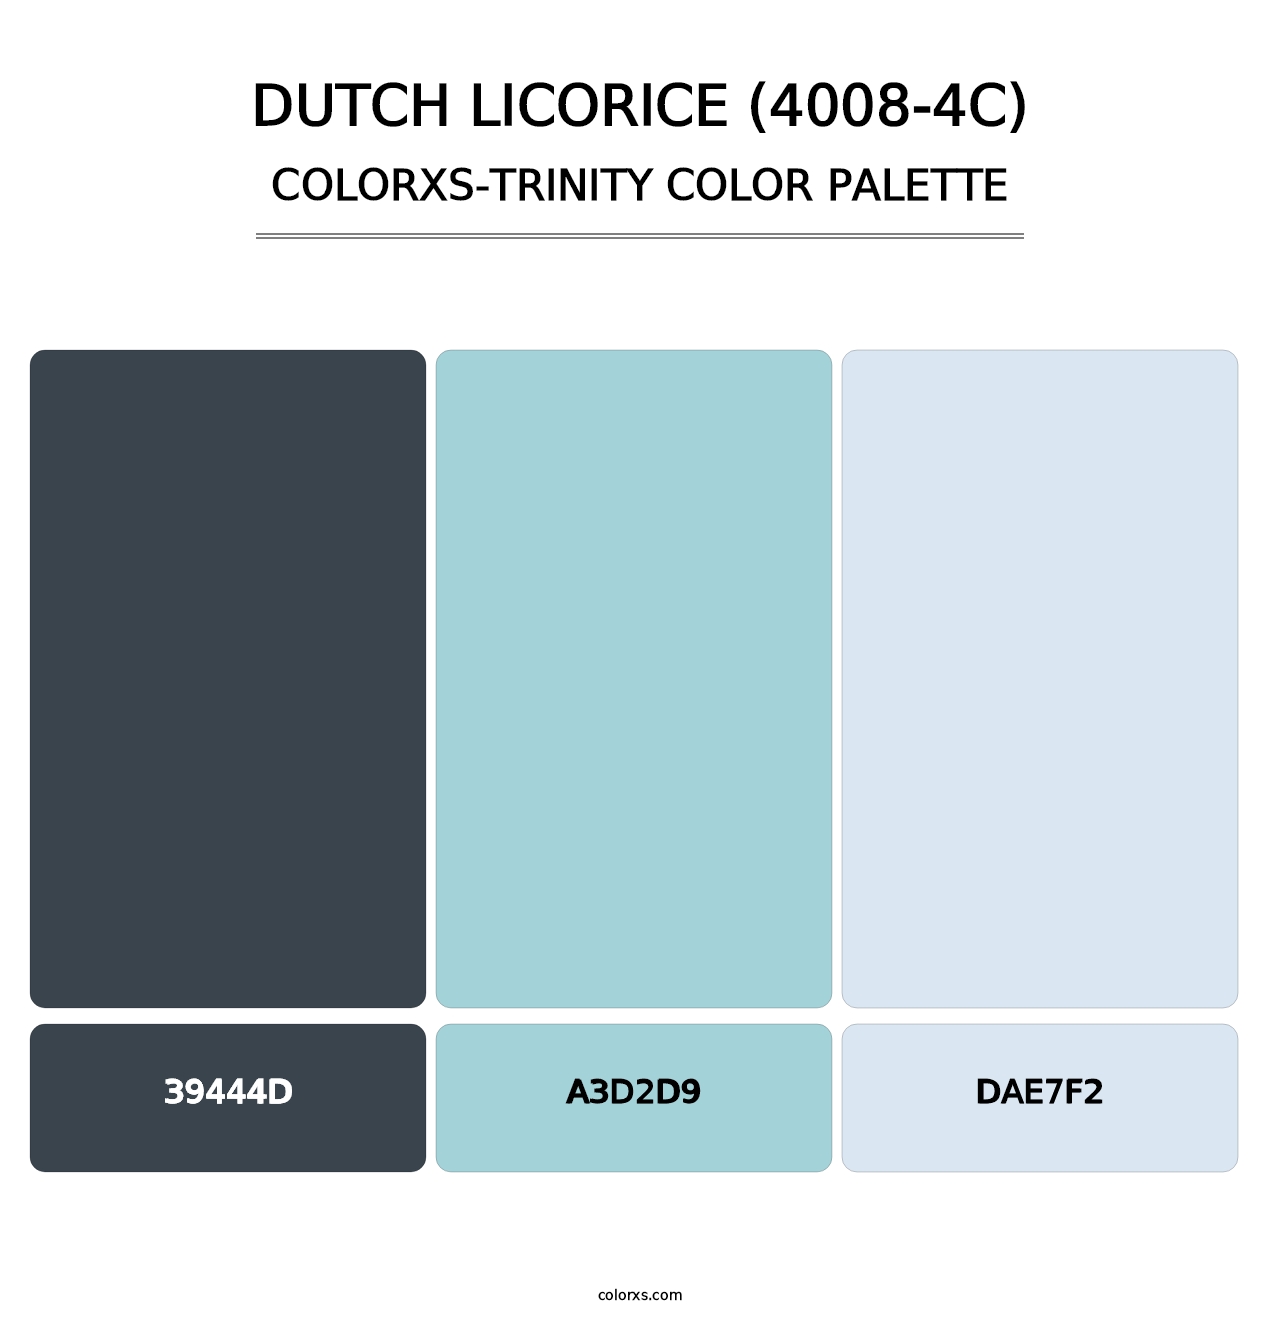 Dutch Licorice (4008-4C) - Colorxs Trinity Palette